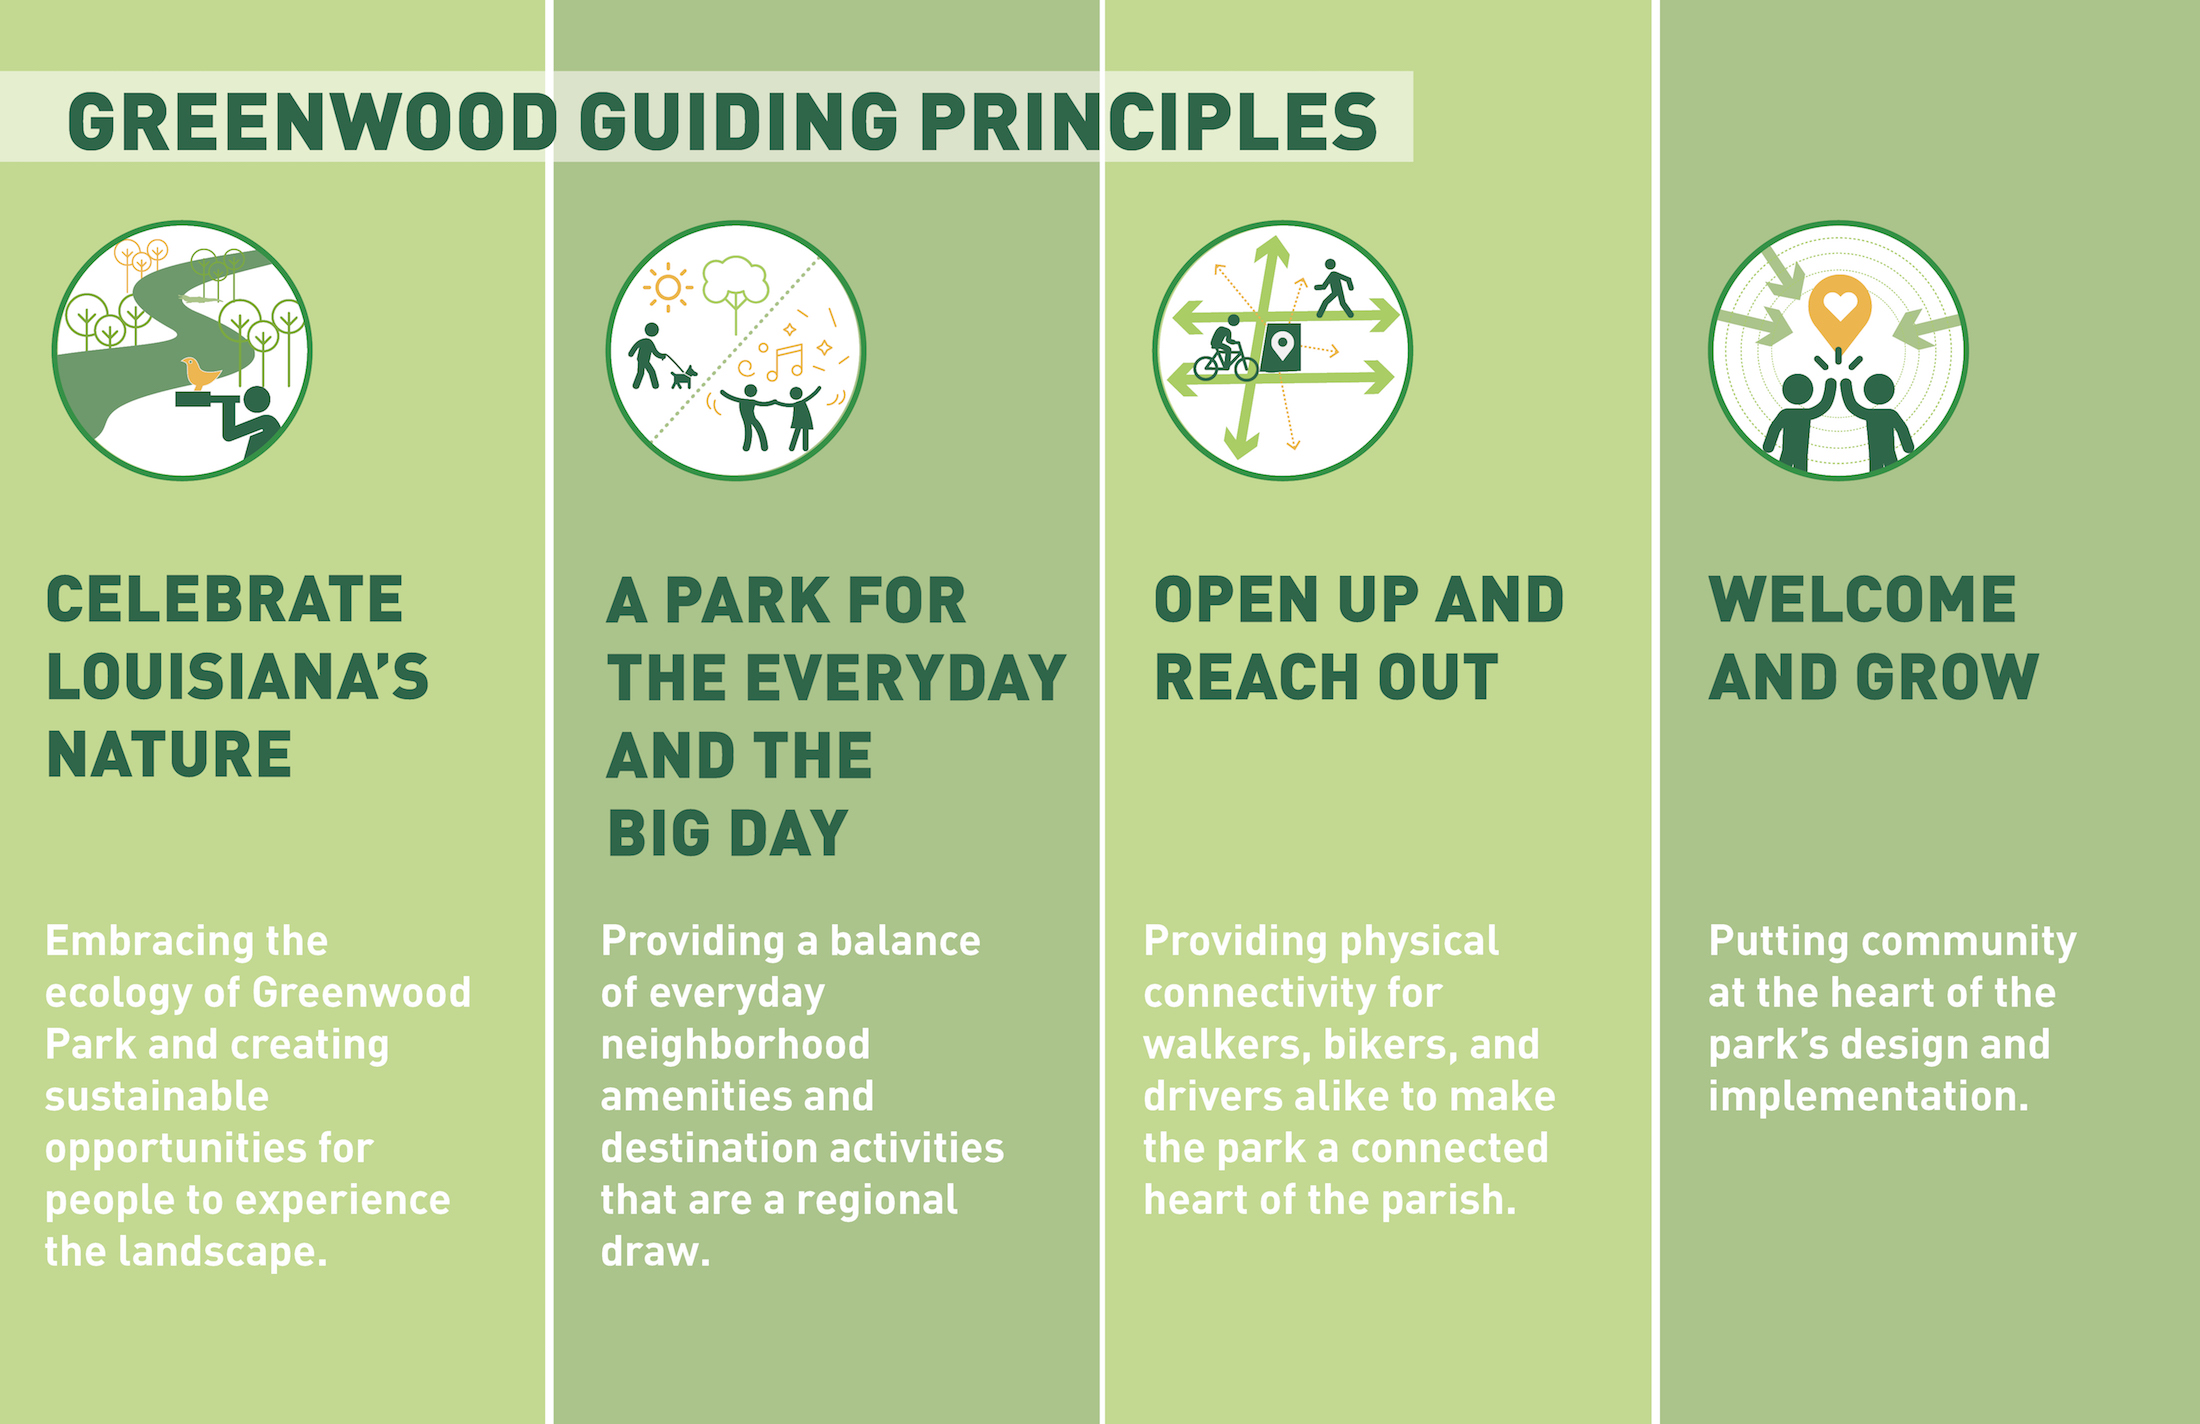 Greenwood Guiding Principles